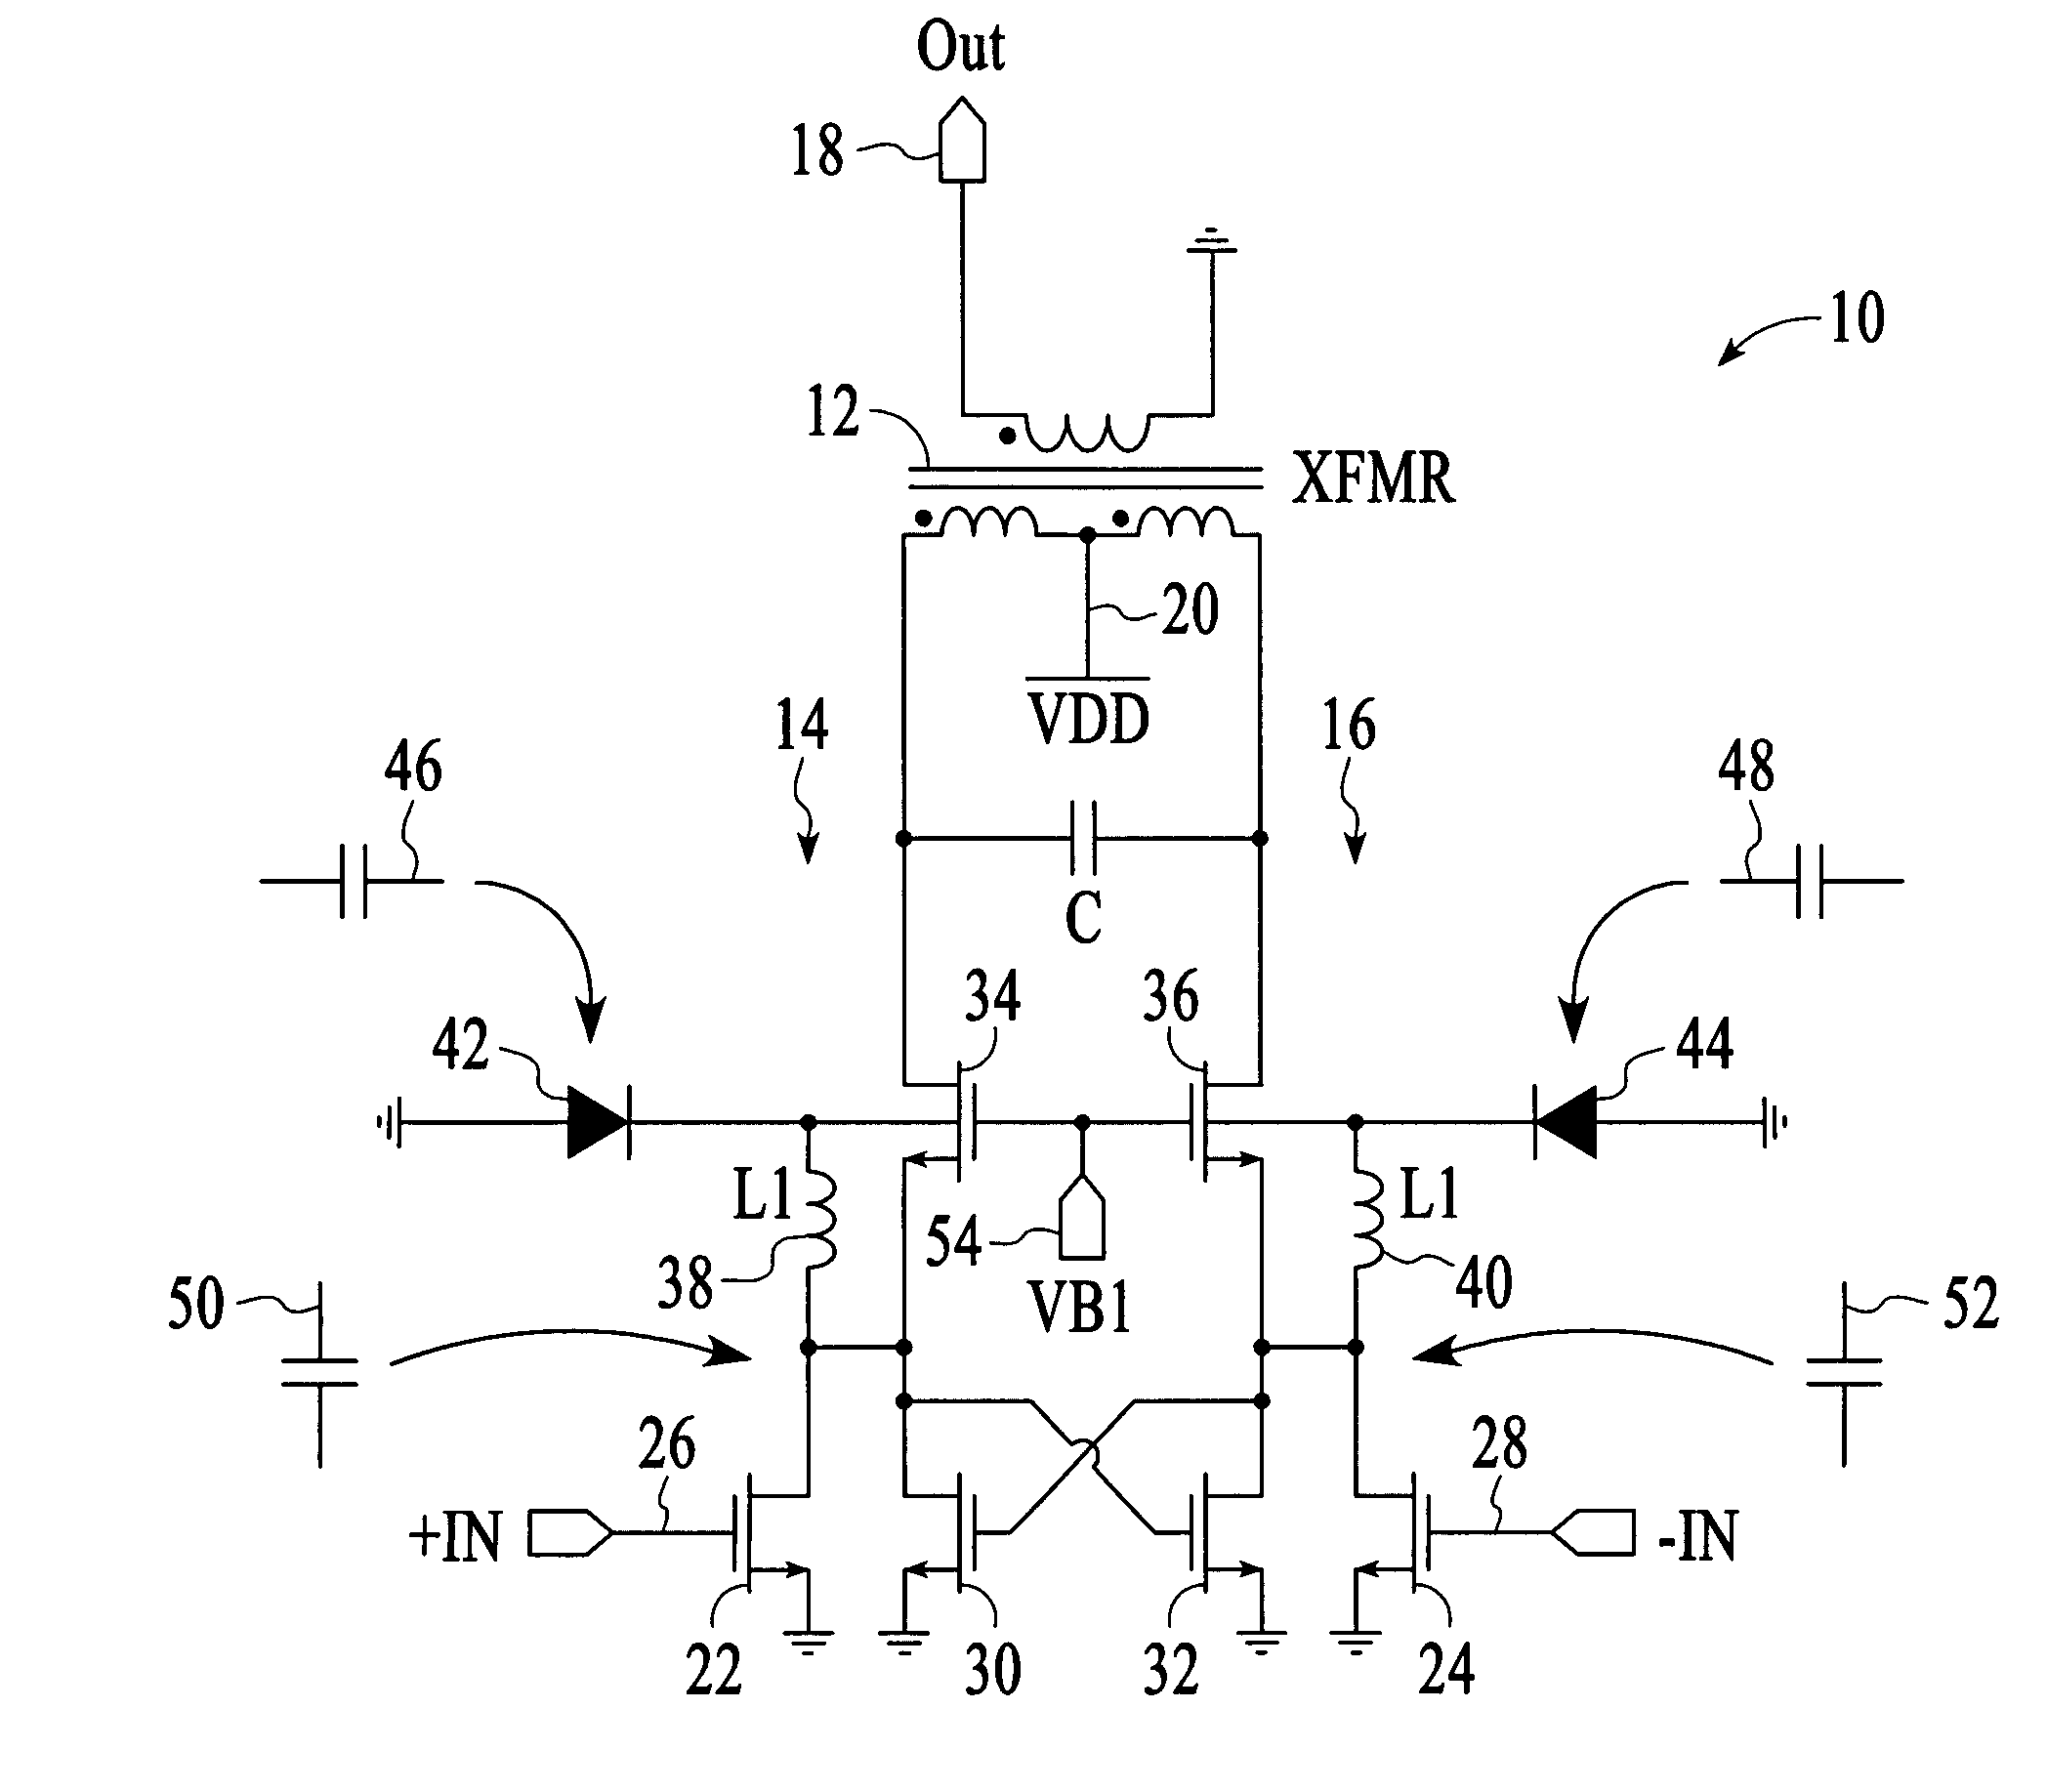 Power amplifier utilizing high breakdown voltage circuit topology